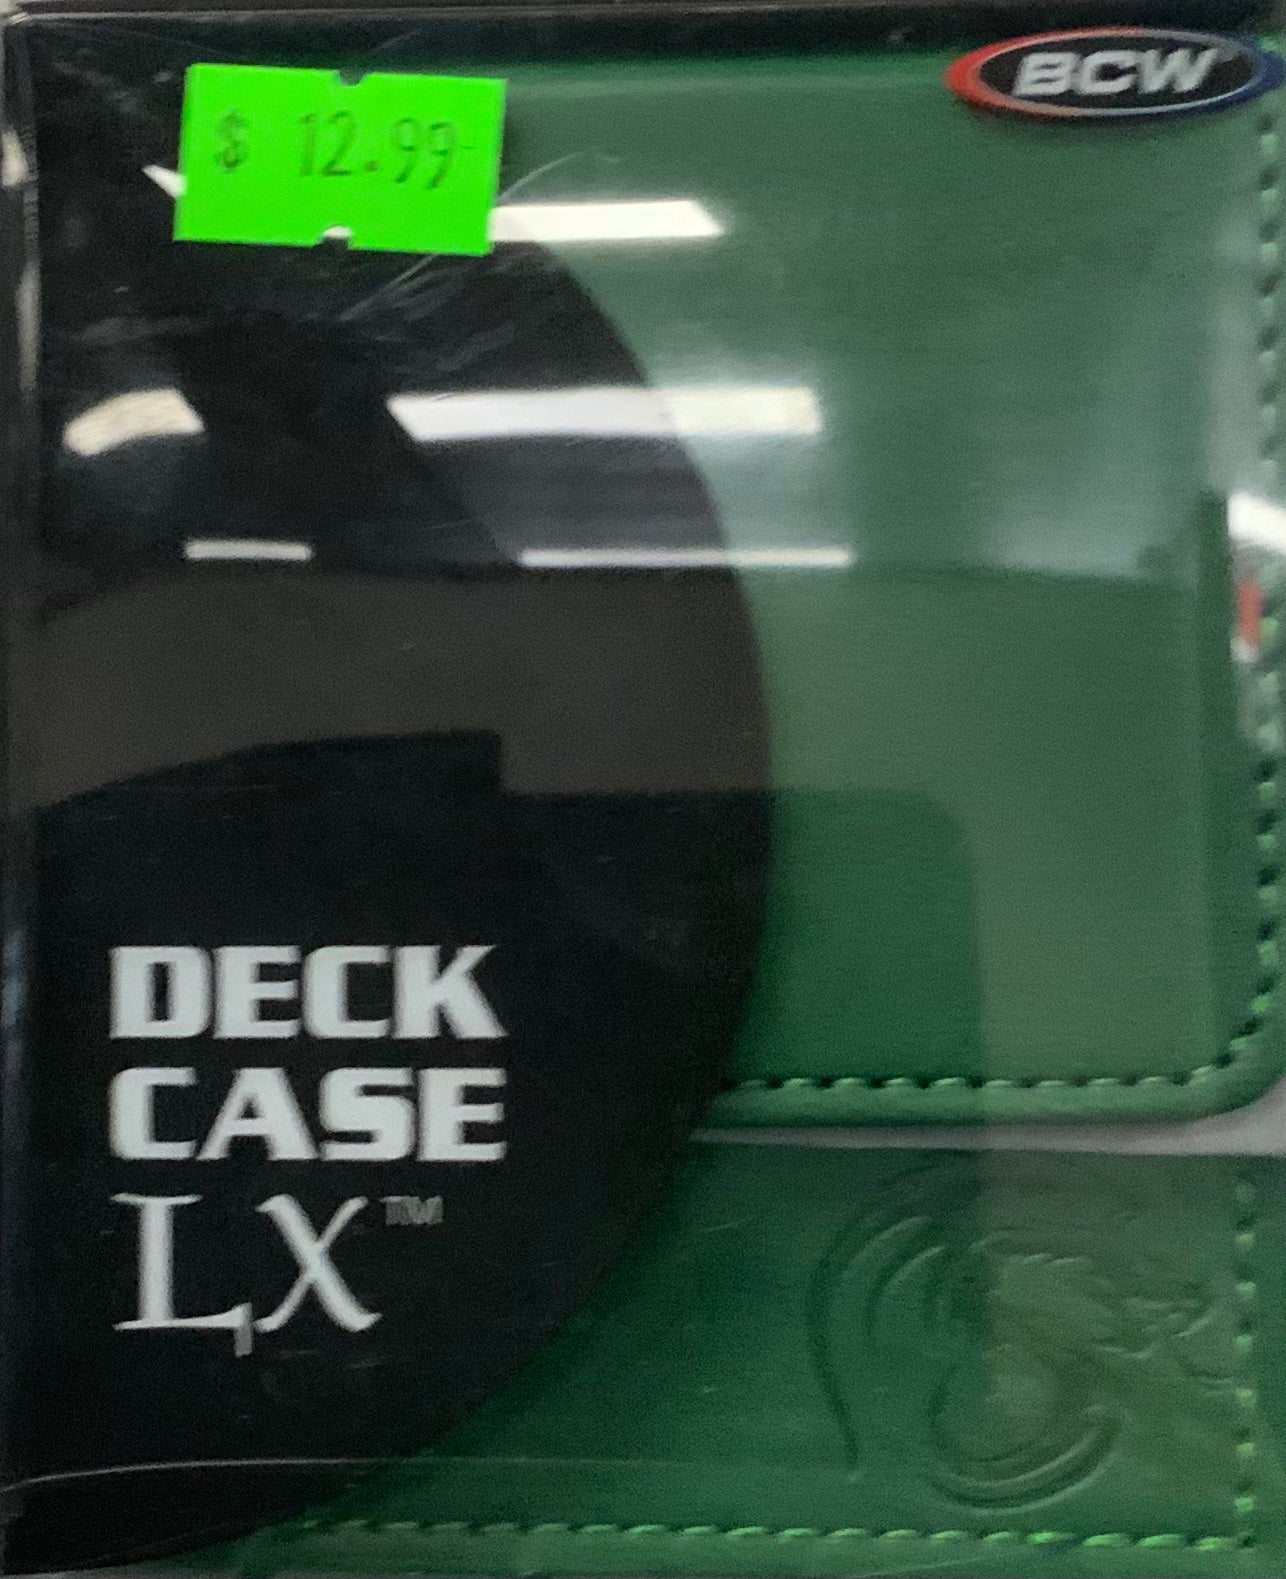 BCW Deck Case LX - Green